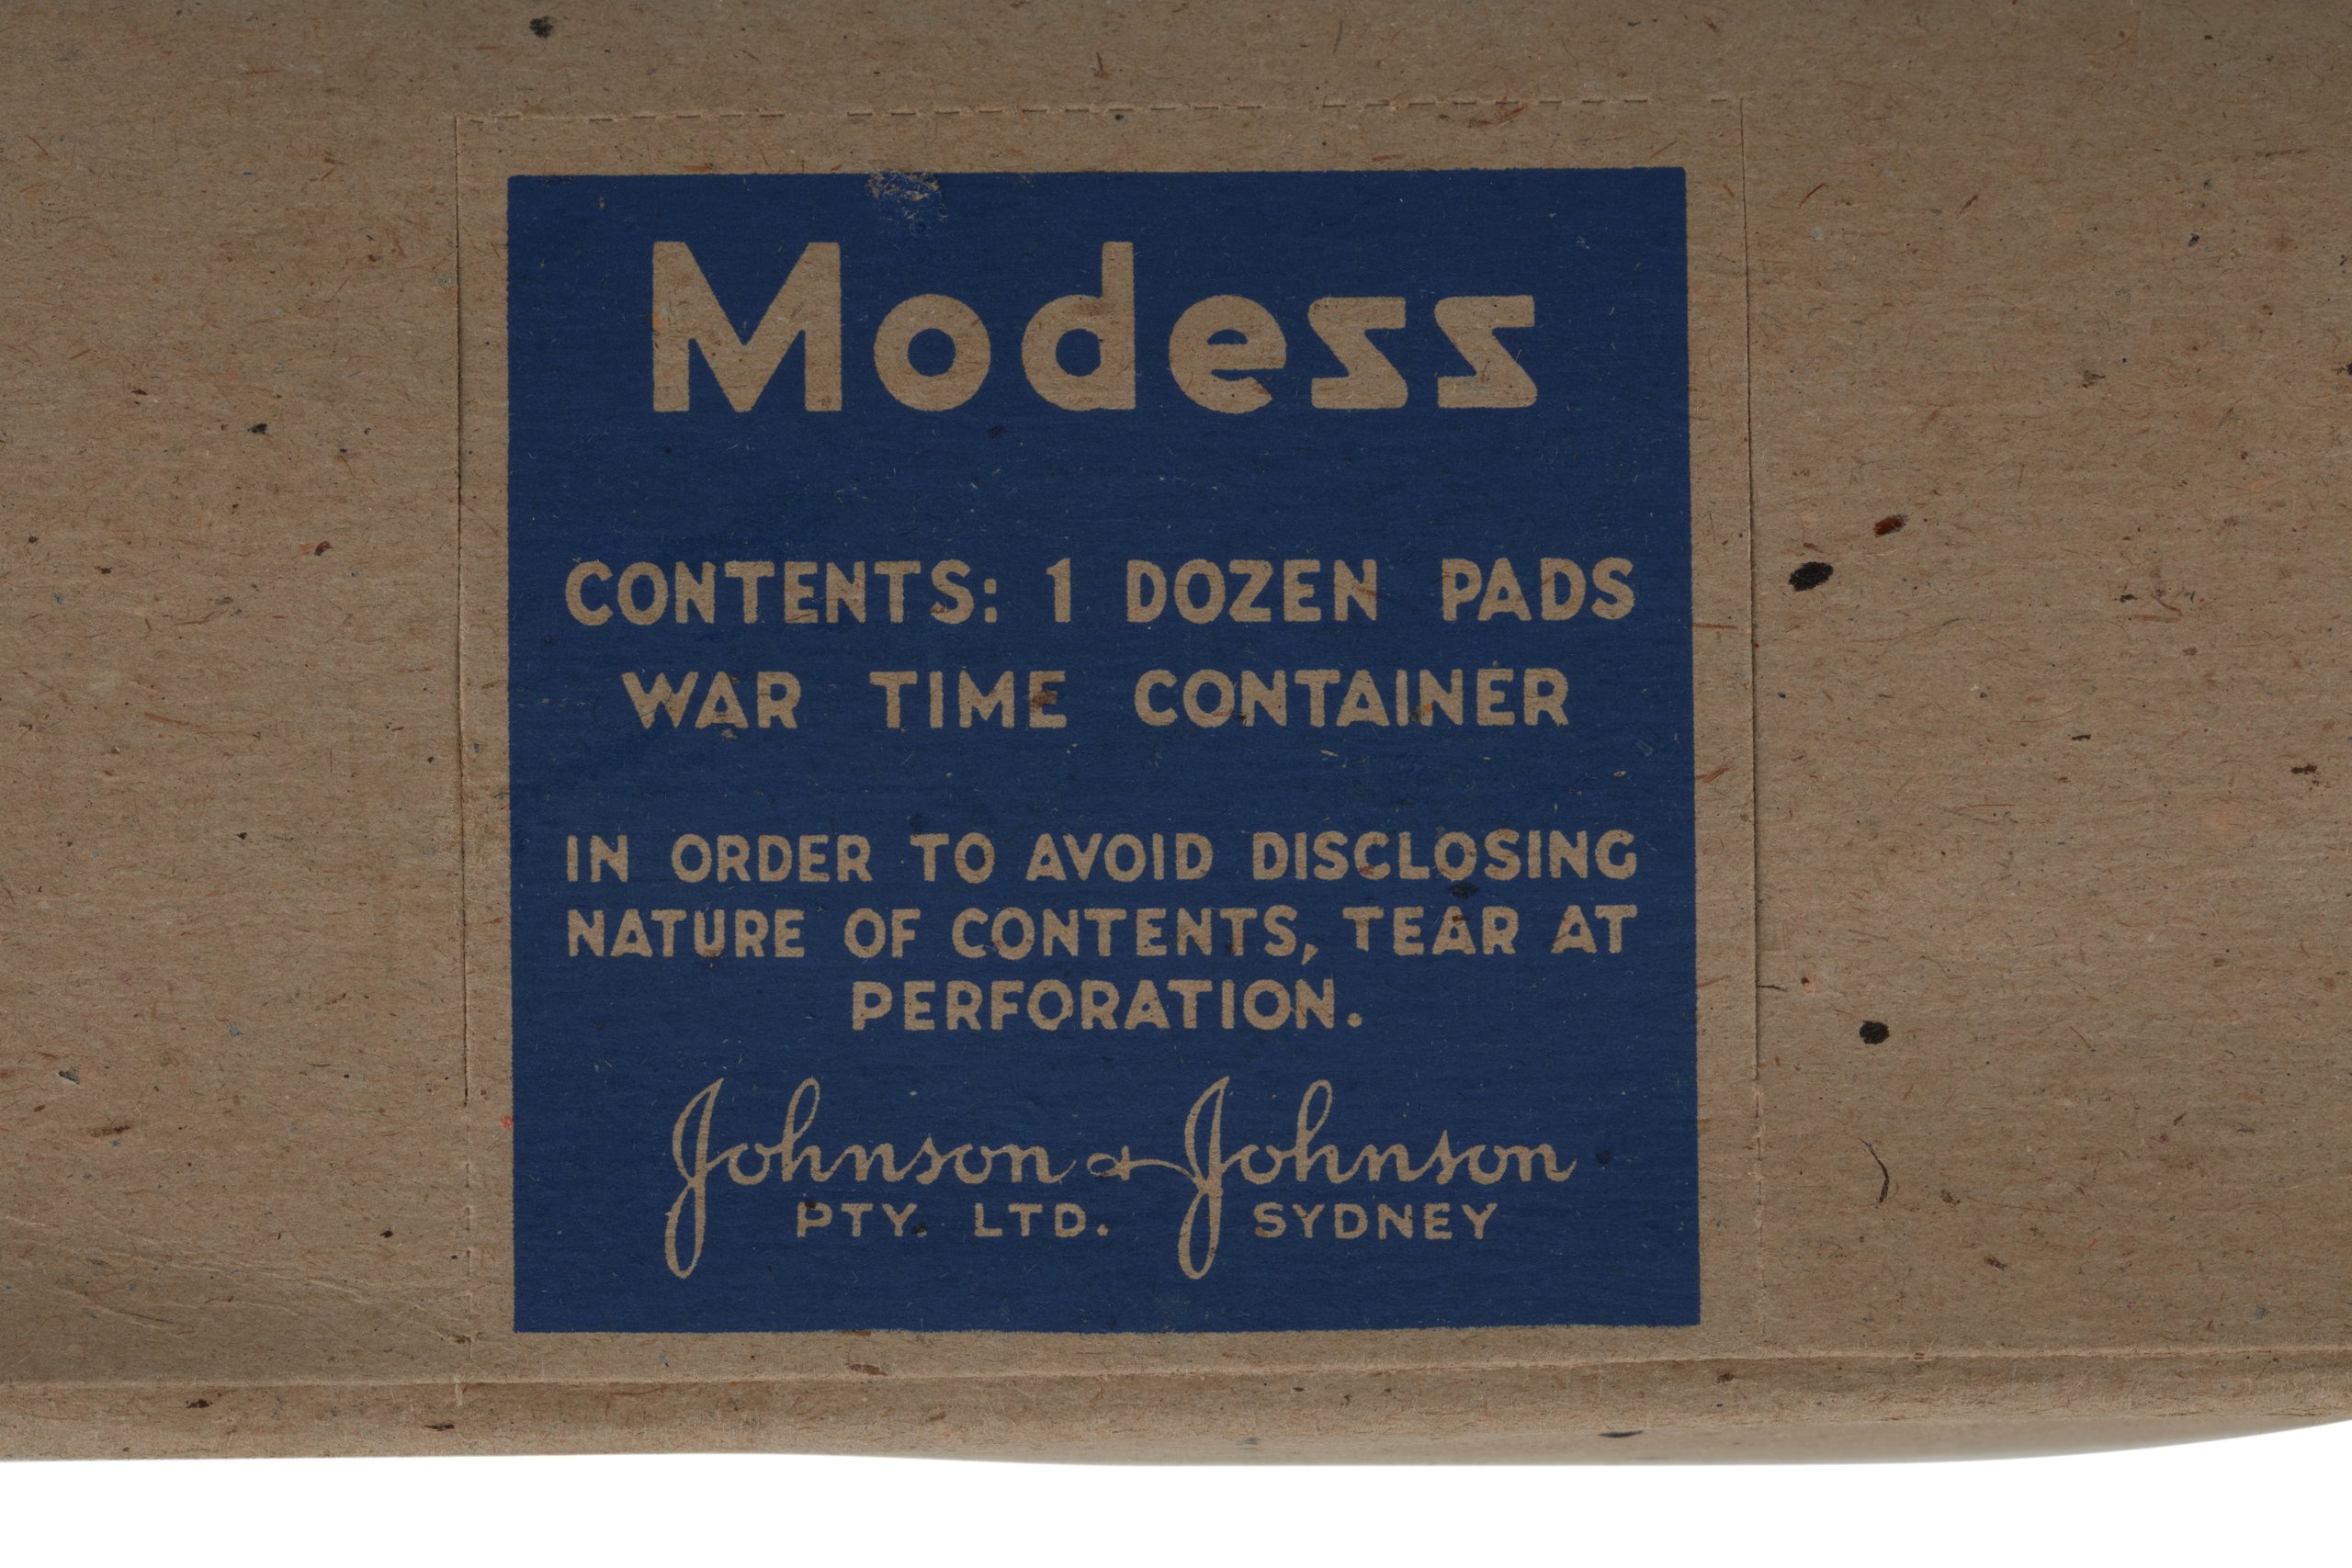 Box of 'Modess' sanitary pads by Johnson & Johnson Pty Ltd